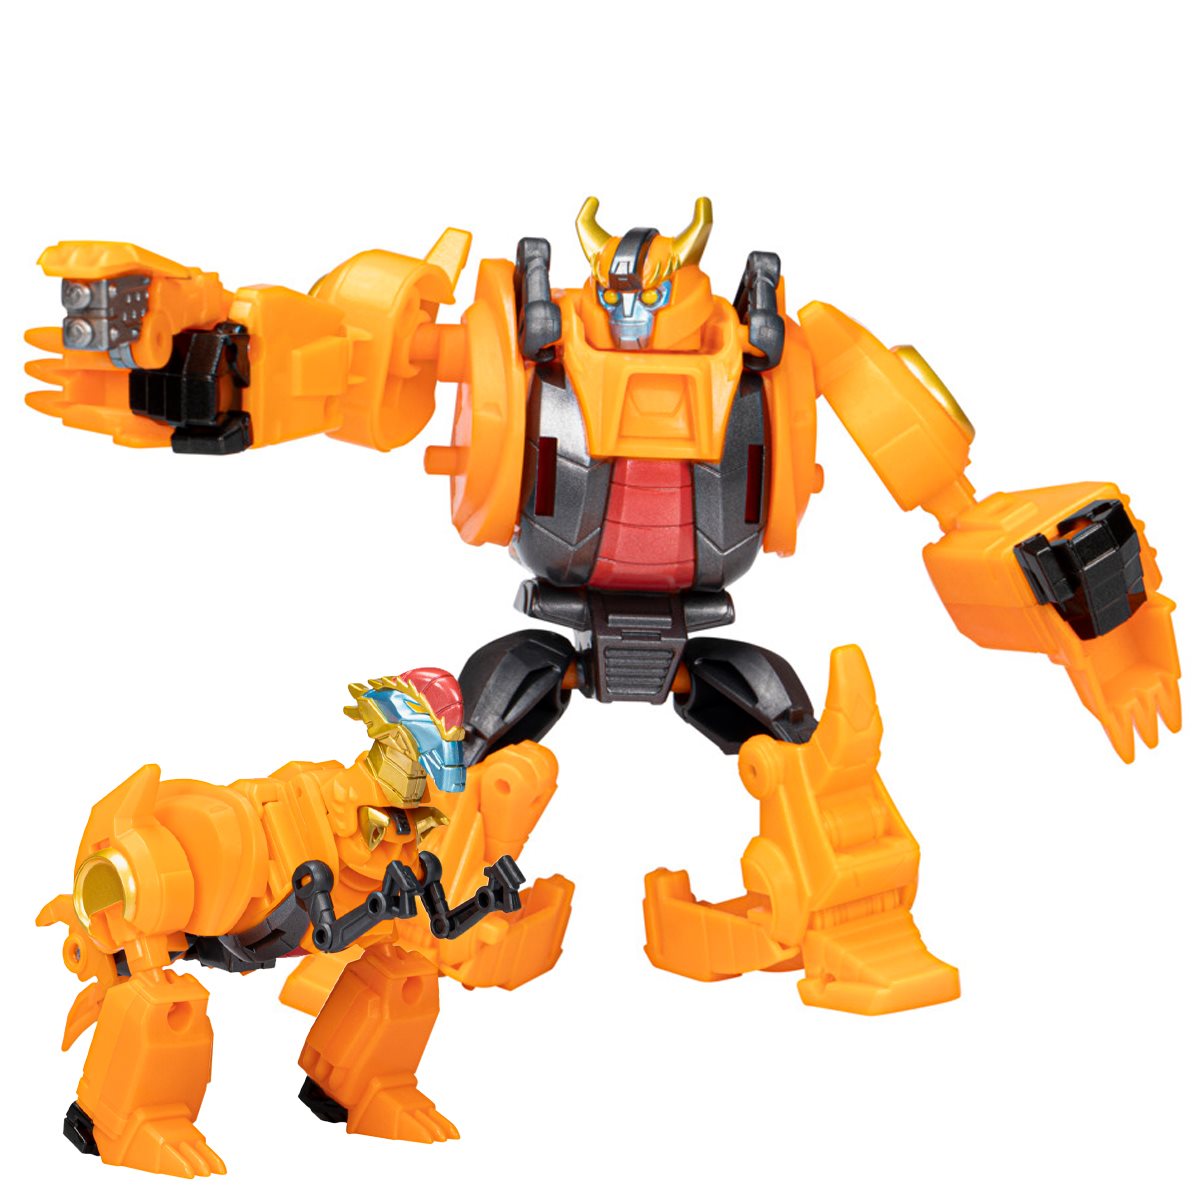 Transformers Toys EarthSpark Warrior Class Skywarp Action Figure